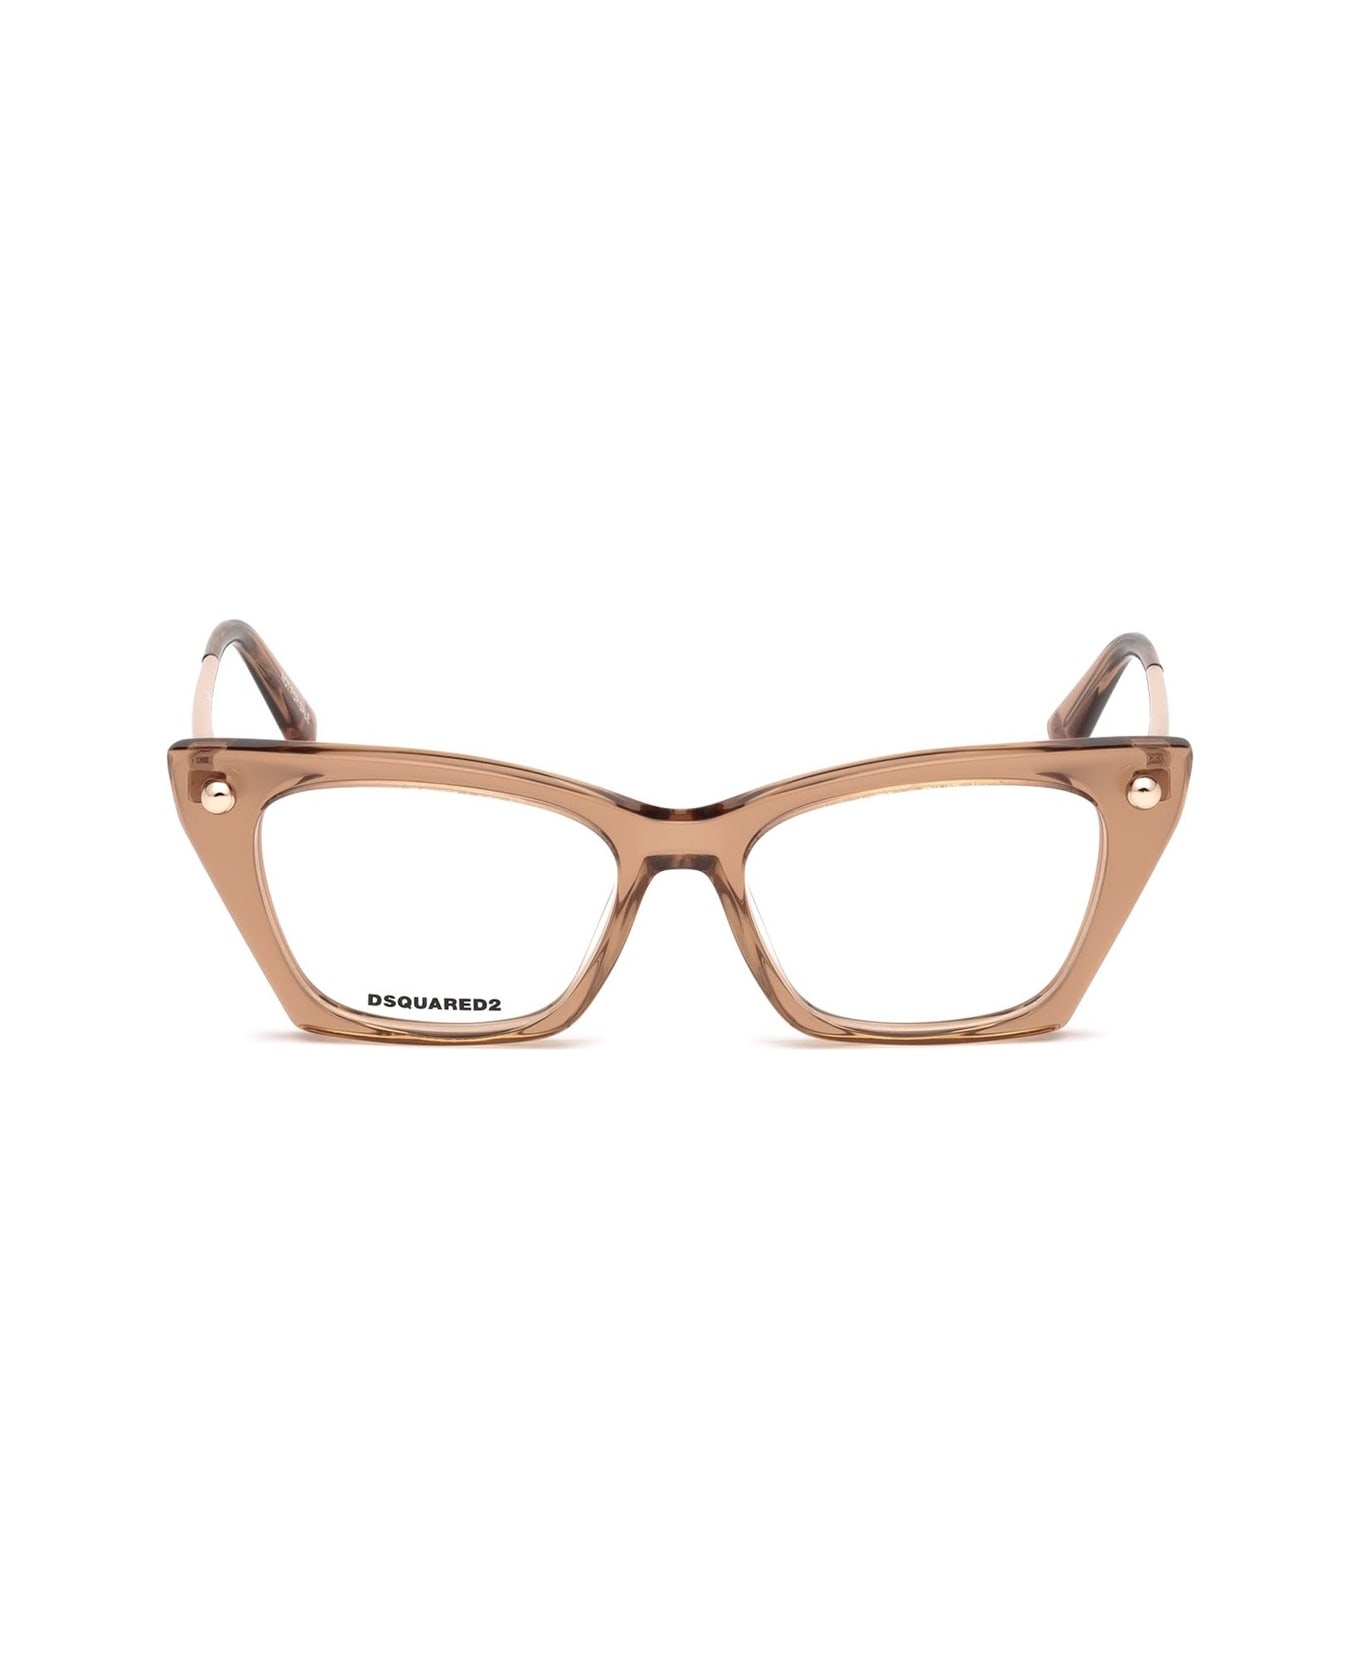 Dsquared2 Eyewear Dq5245 Glasses - Beige